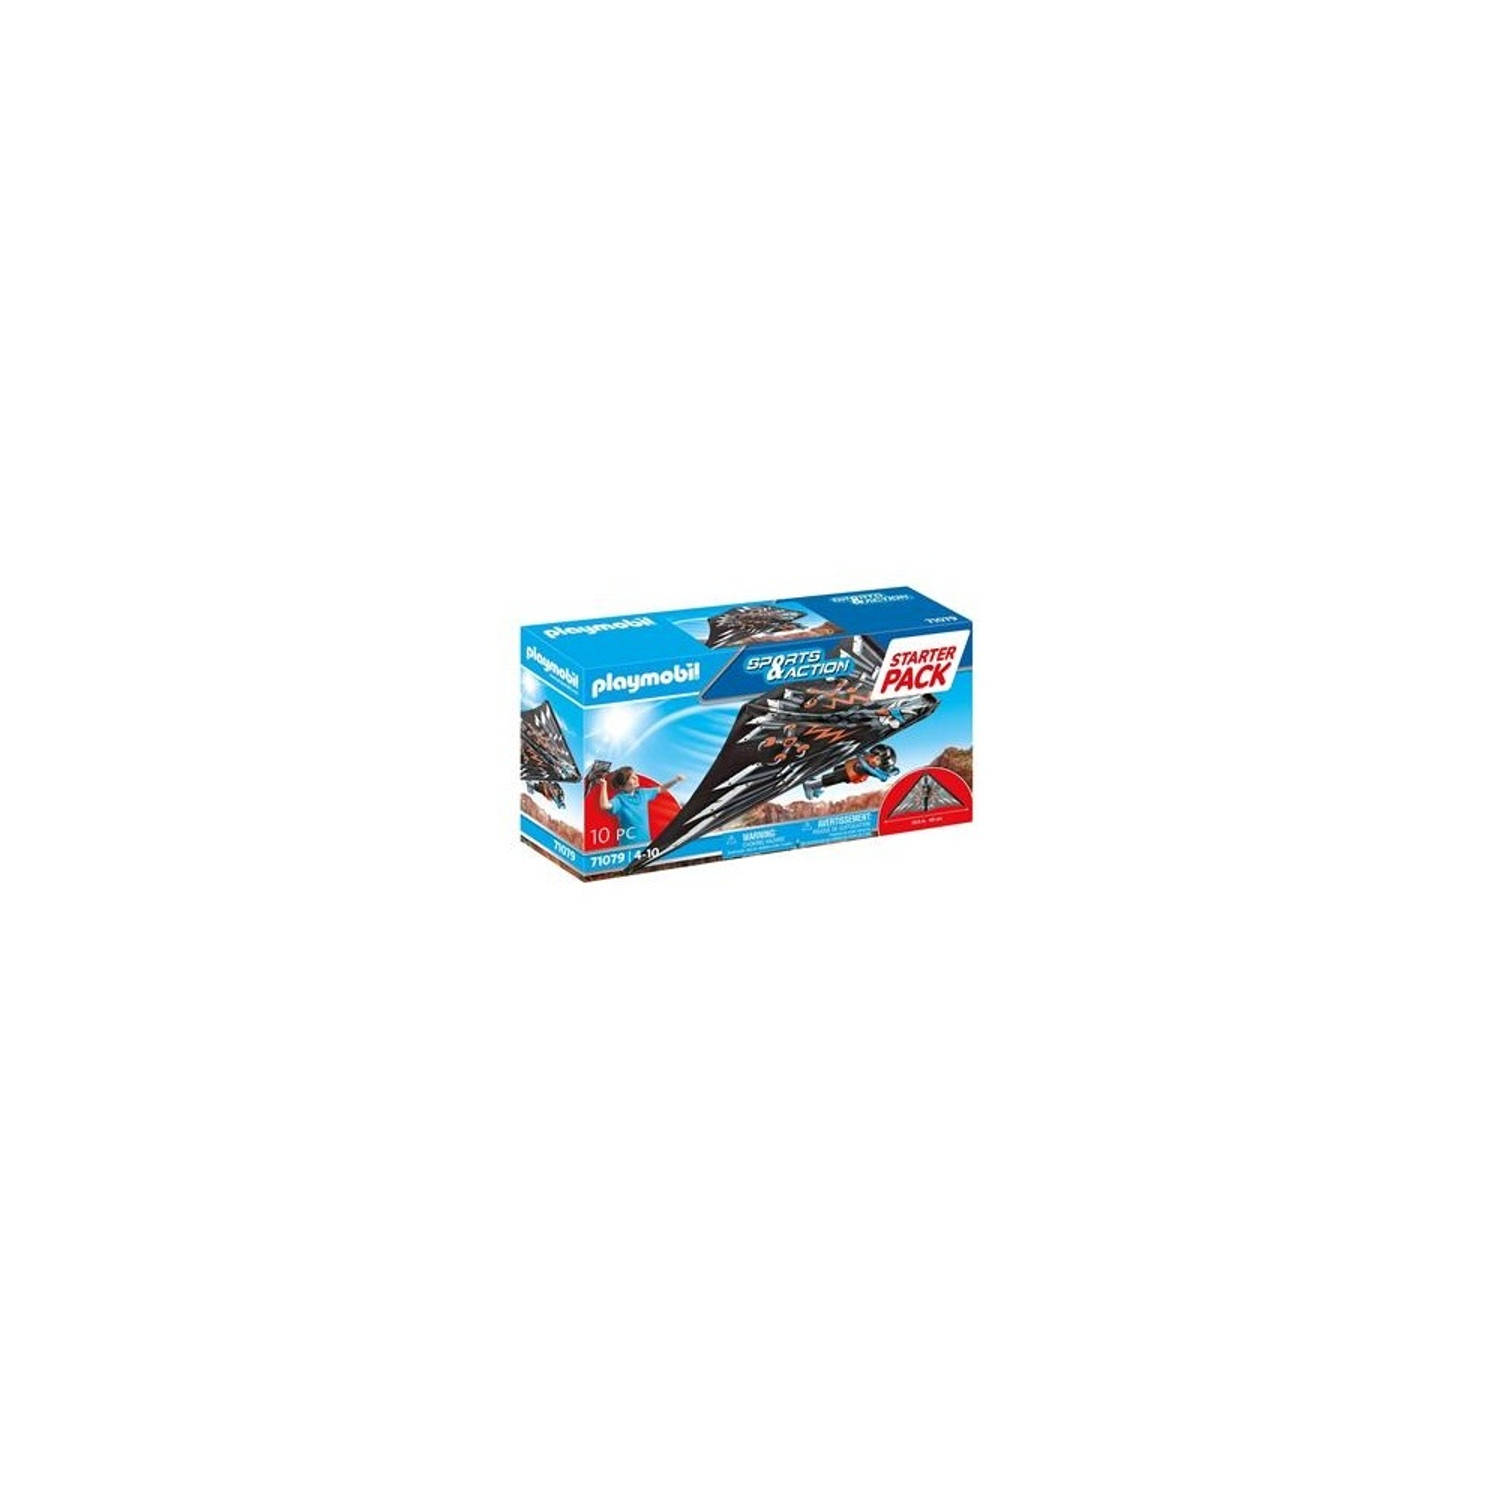 Playmobil® Constructie-speelset Starter Pack Drachenflieger (71079), Sports & Action